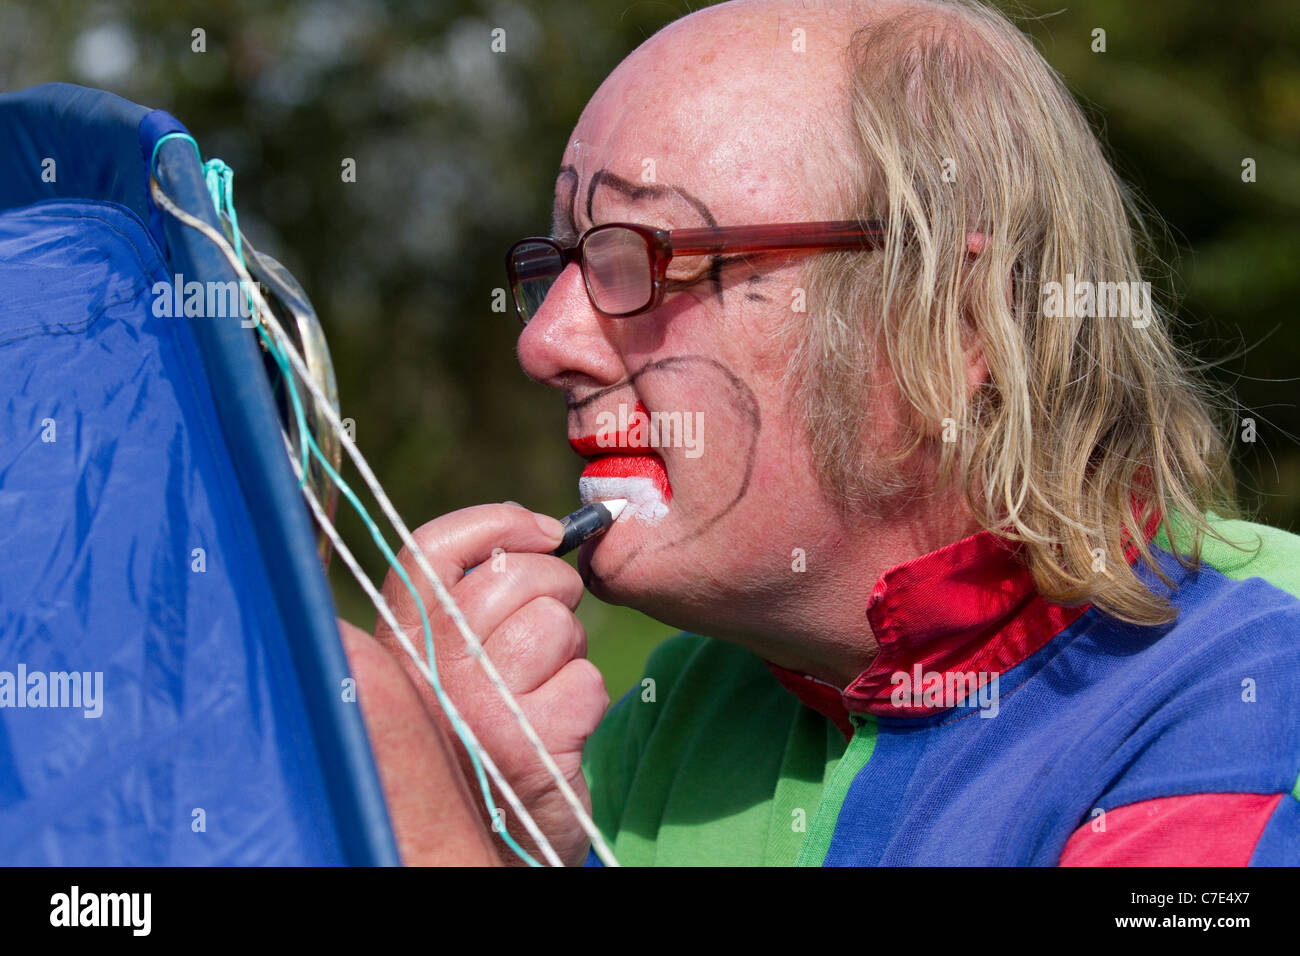 Kristoff le Clown appliquant le maquillage   Hesketh Bank, Southport, Royaume-Uni Banque D'Images